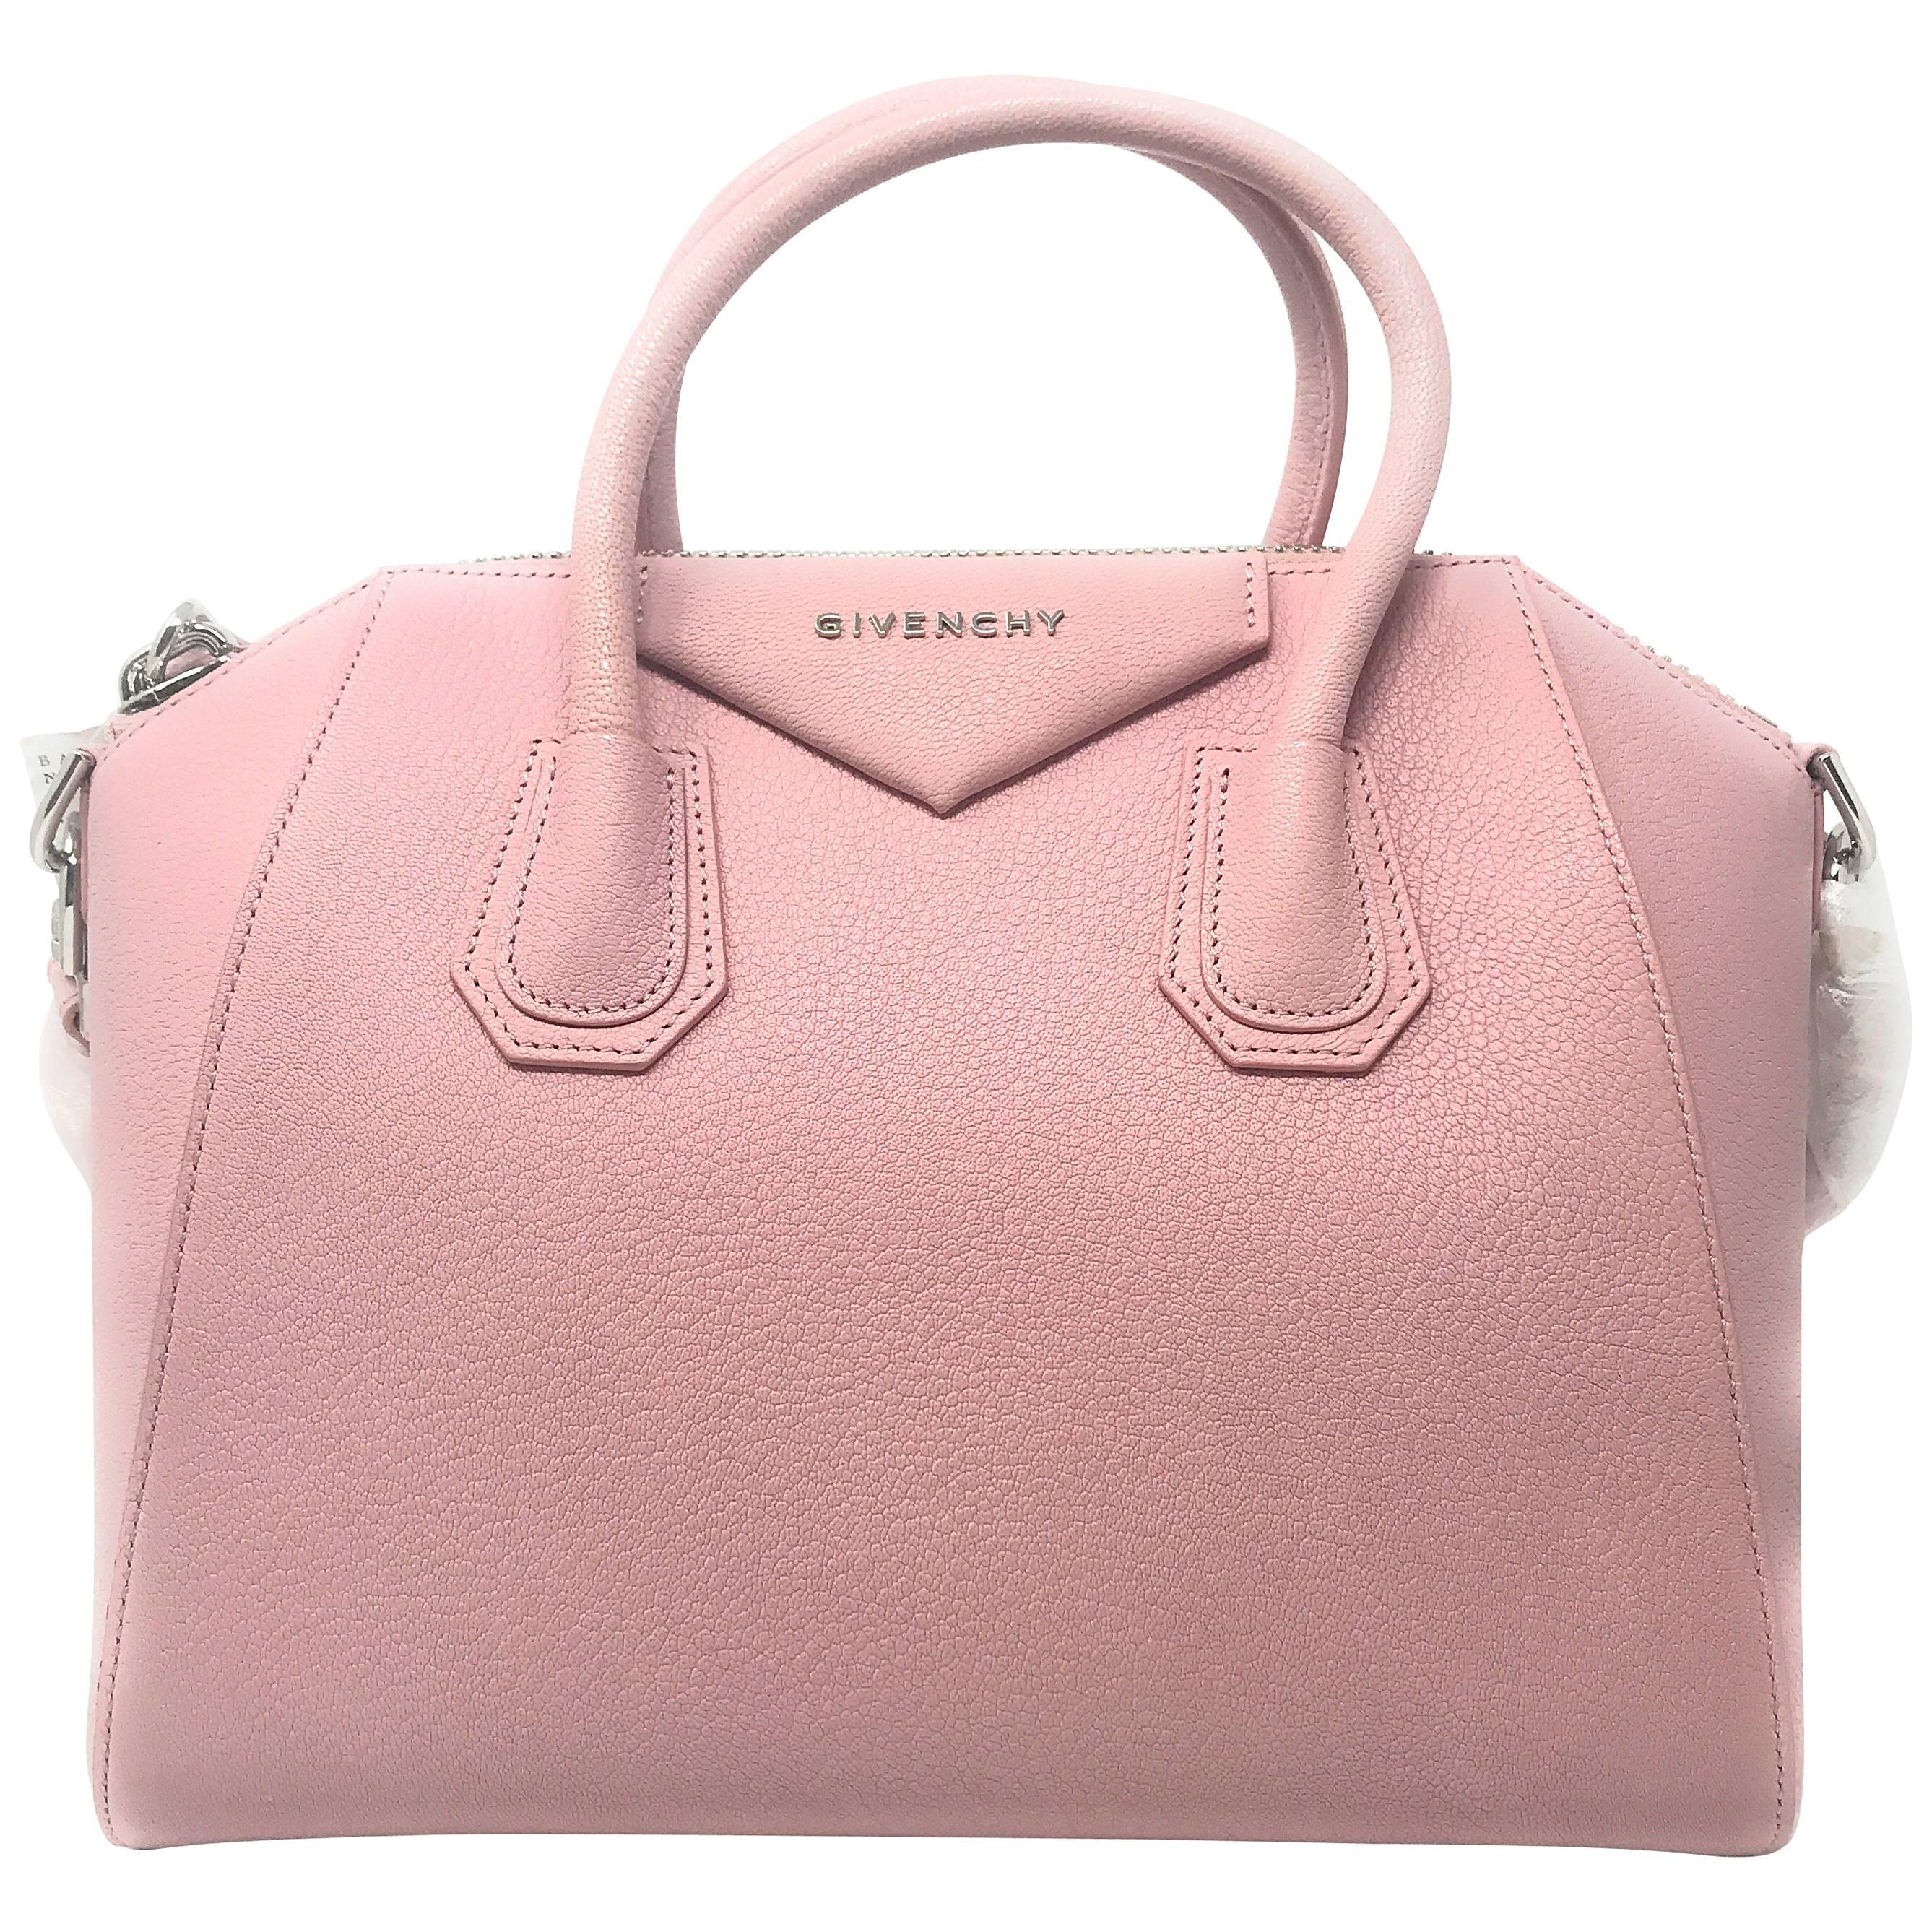 Givenchy Antigona Baby Pink Bag